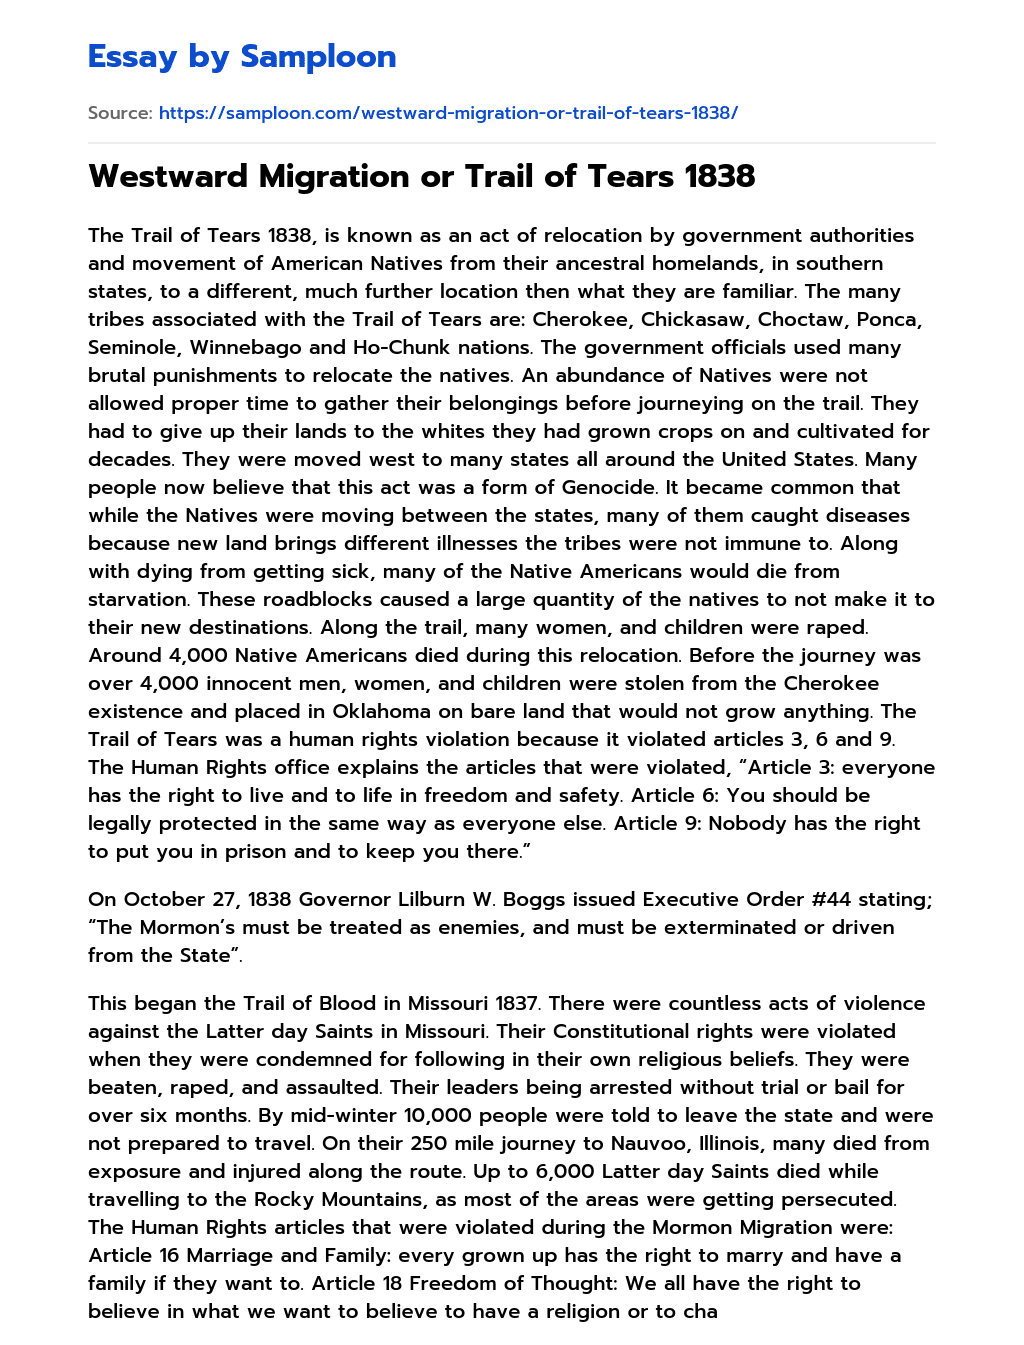 Westward Migration or Trail of Tears 1838 essay